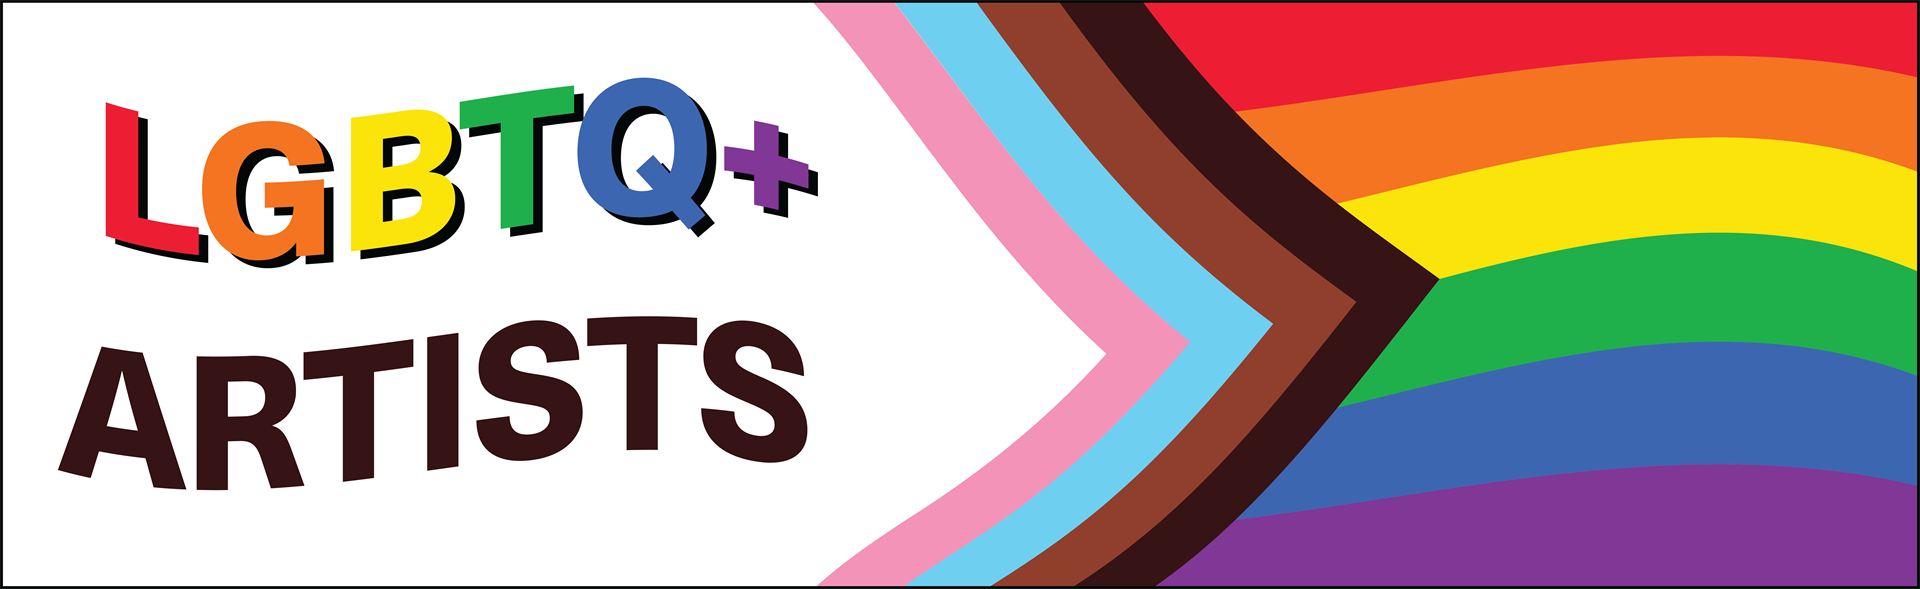 "LGBTQ+ Artists" banner with LGBTQ+ flag